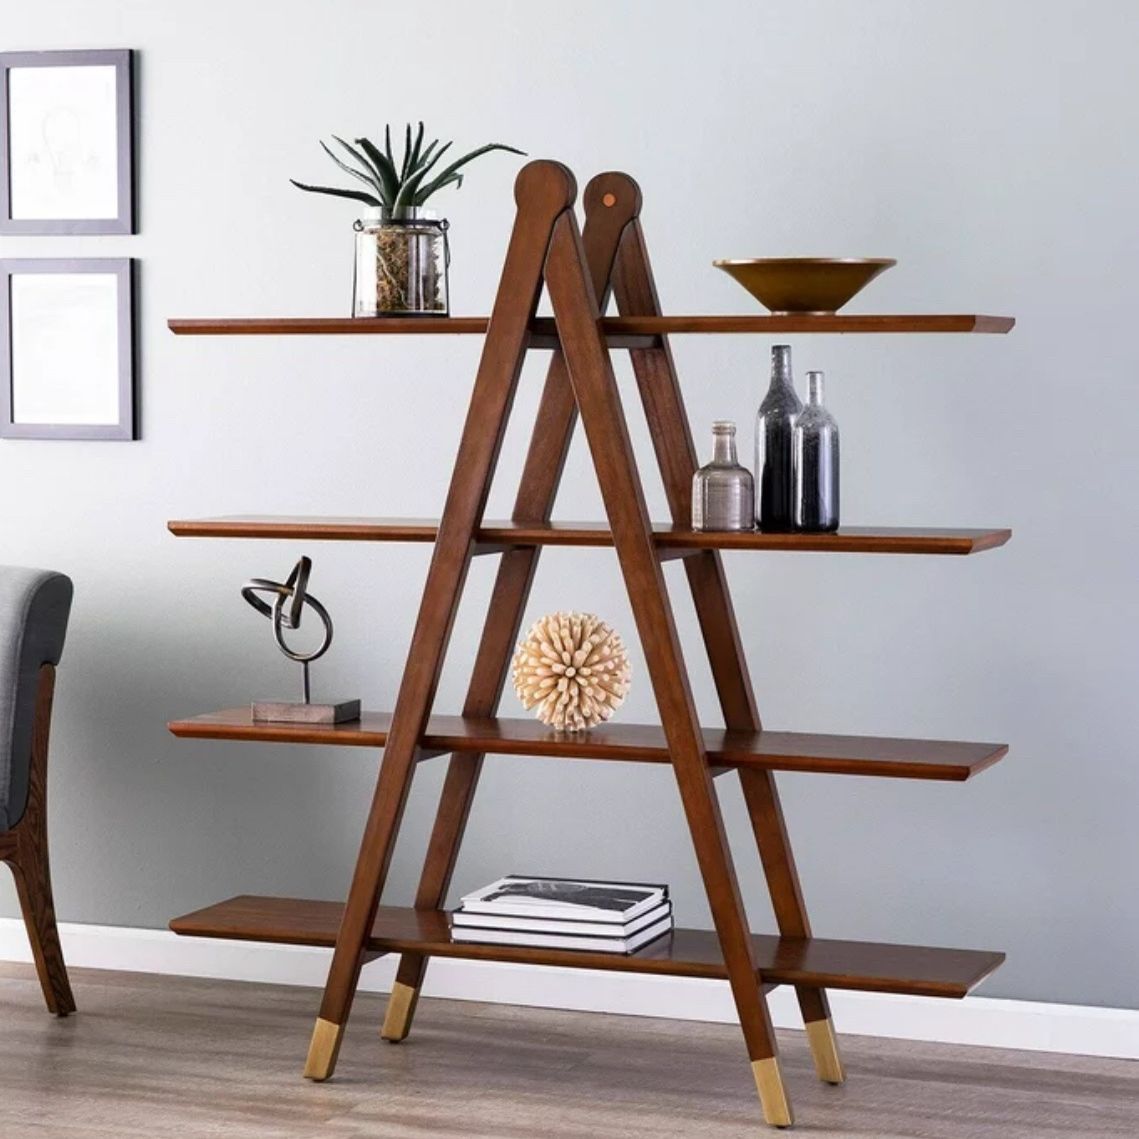 Ladder shelf - $300 OBO, Excellent condition